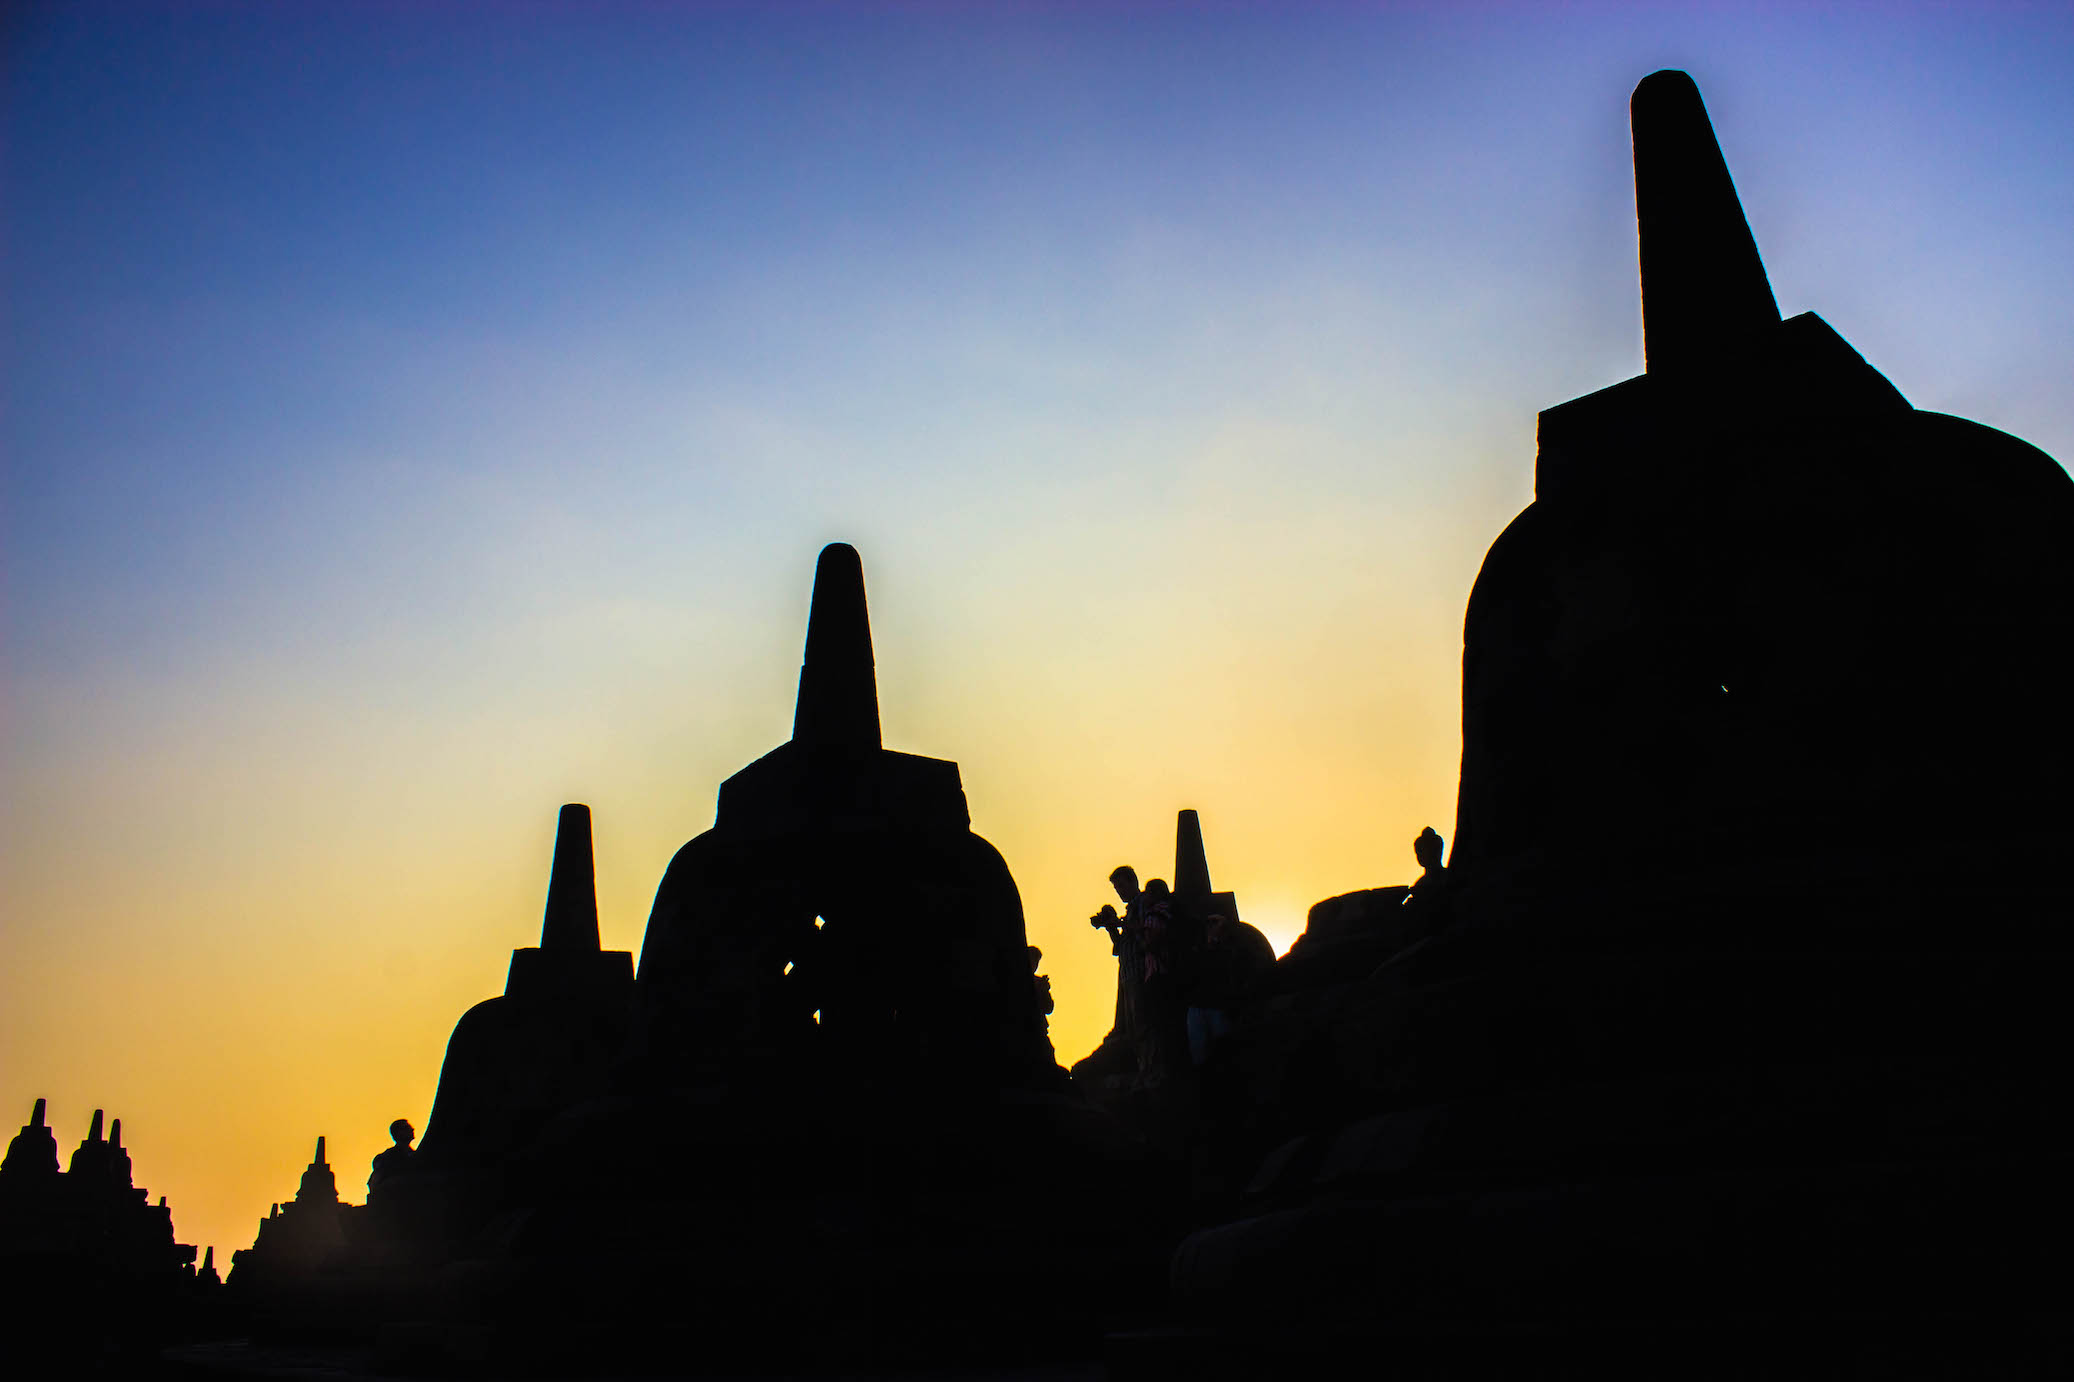 Silhouette of the stupas at Borobudur, Indonesia